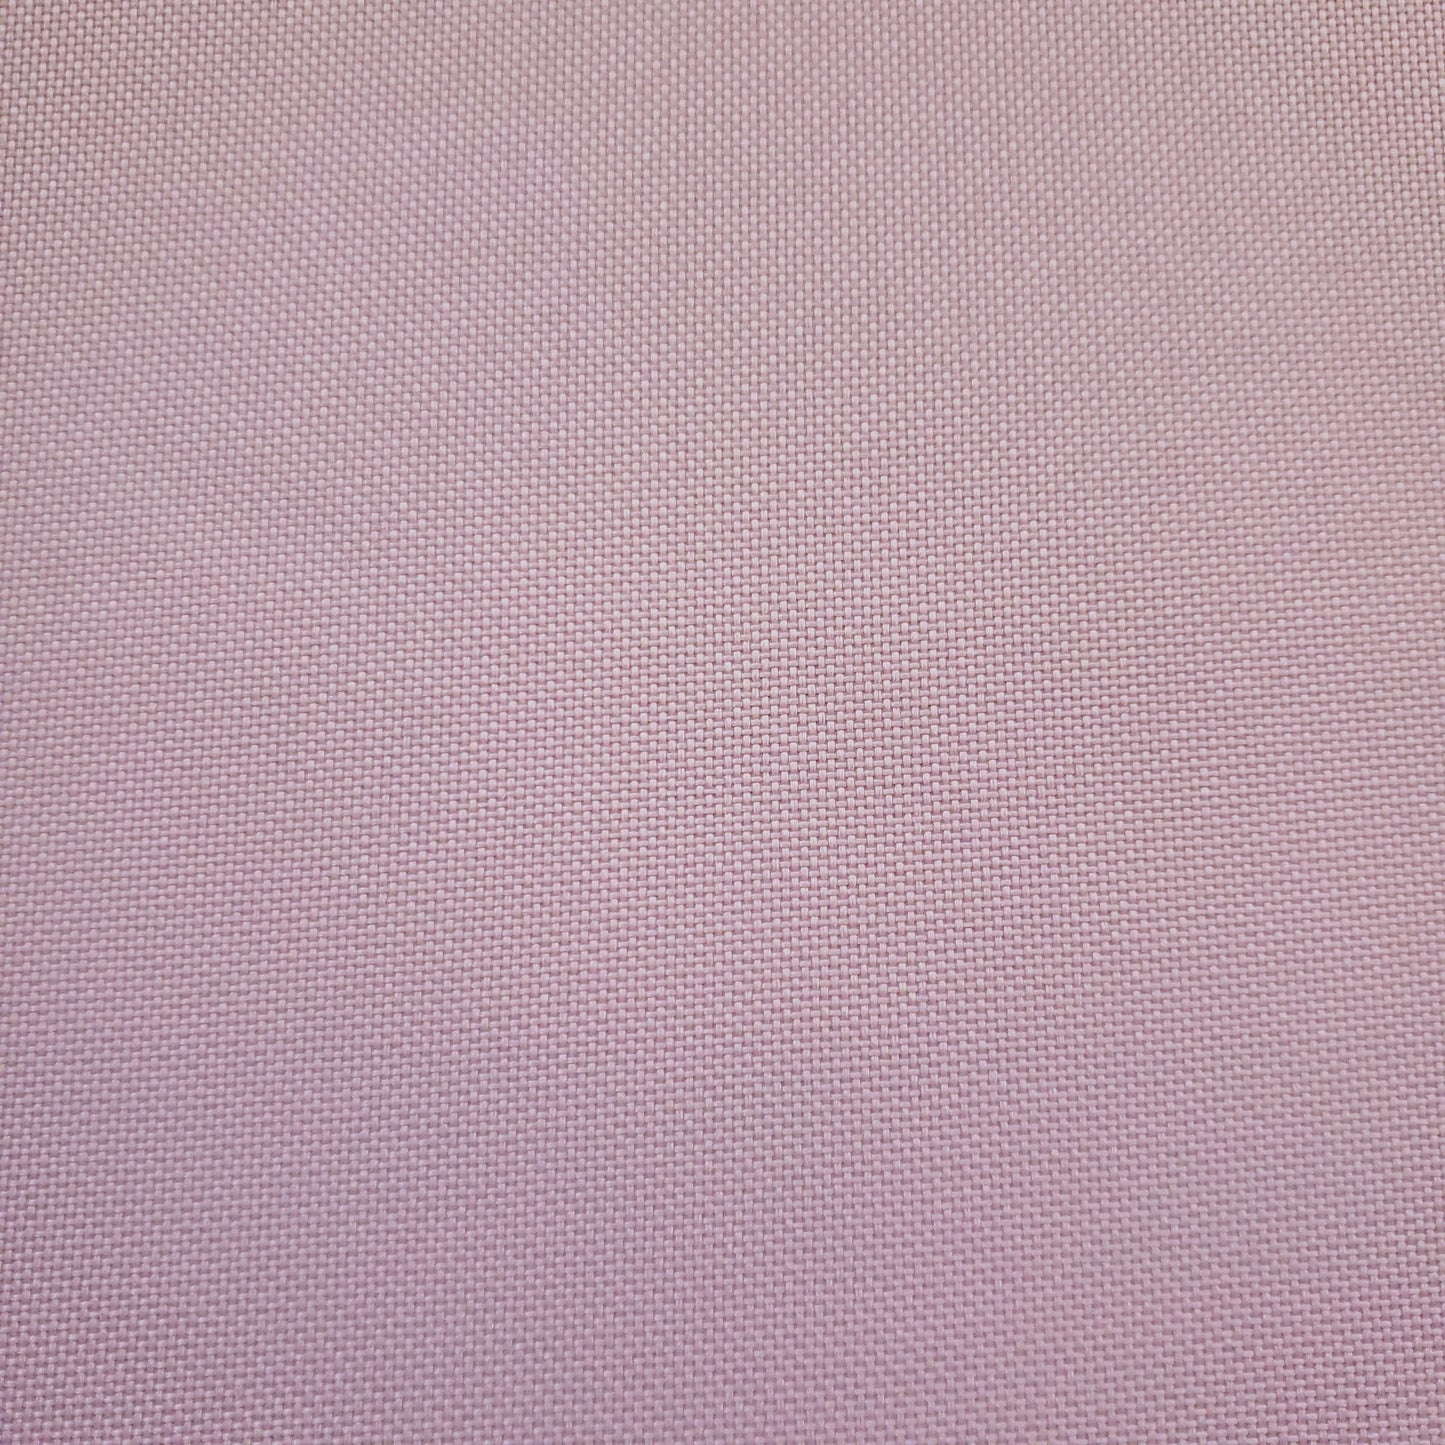 Shell Pink Waterproof Canvas